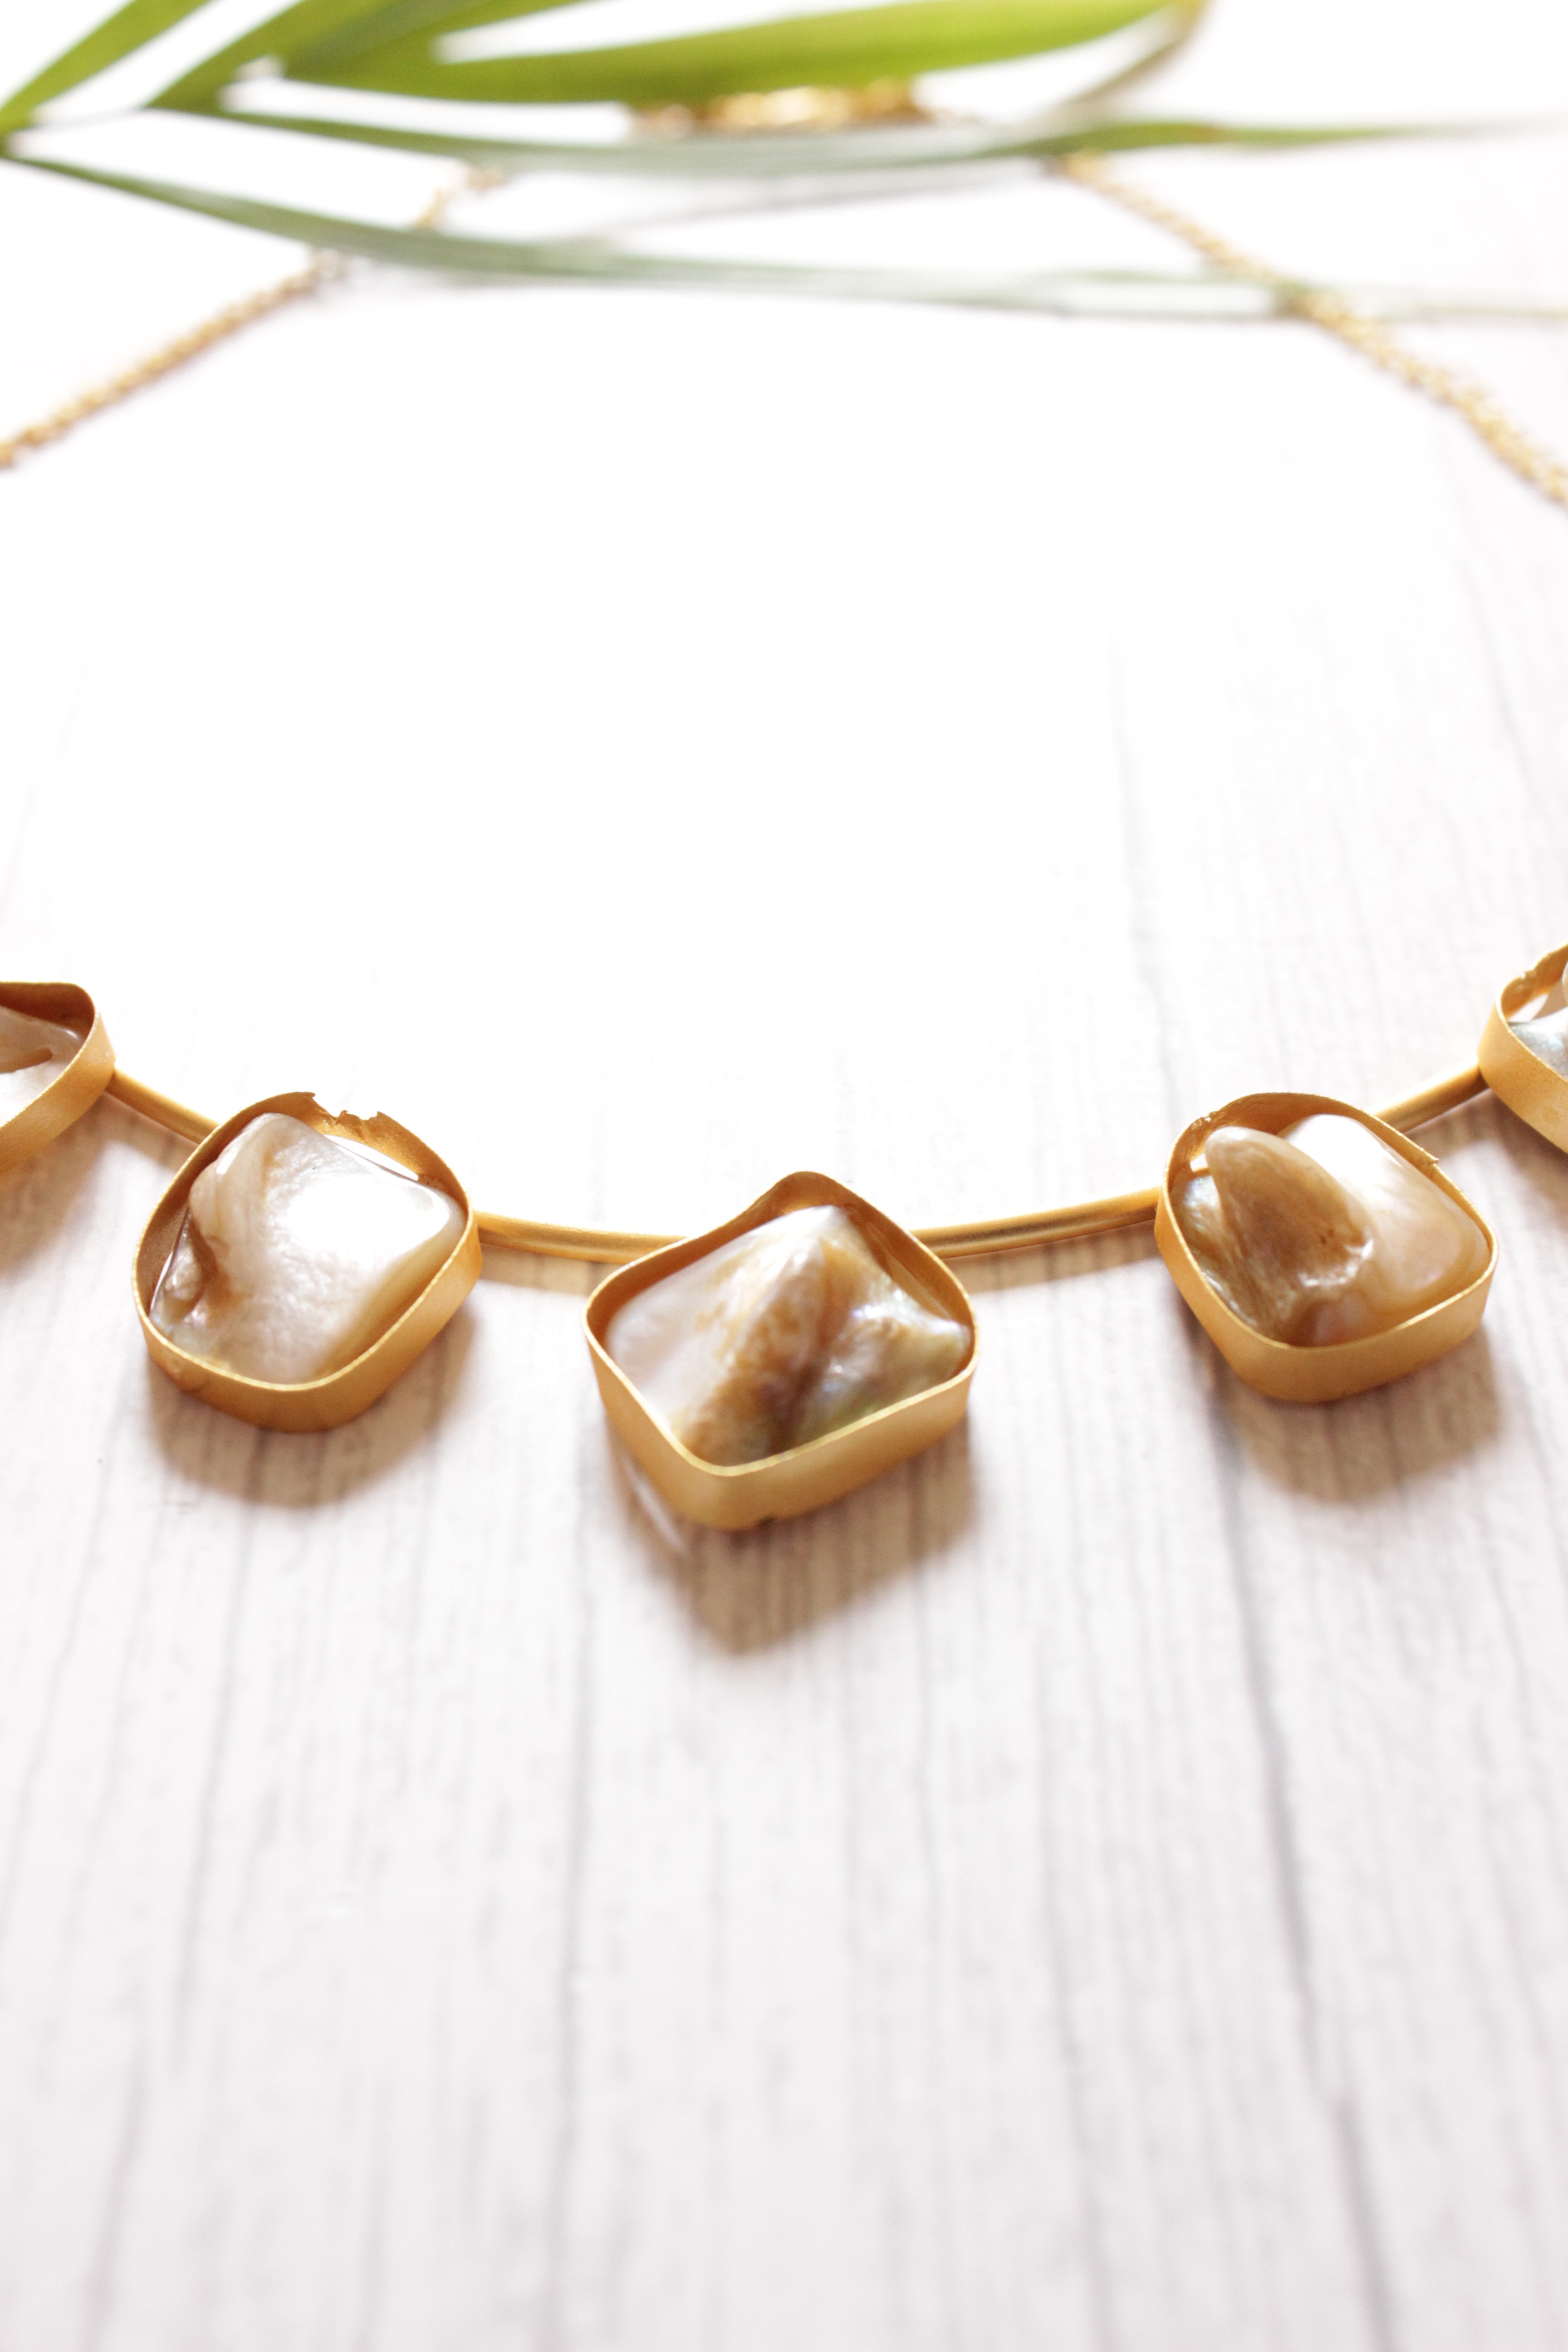 Baroque Pearls Natural Gemstones Embedded Gold Toned Brass Necklace Set